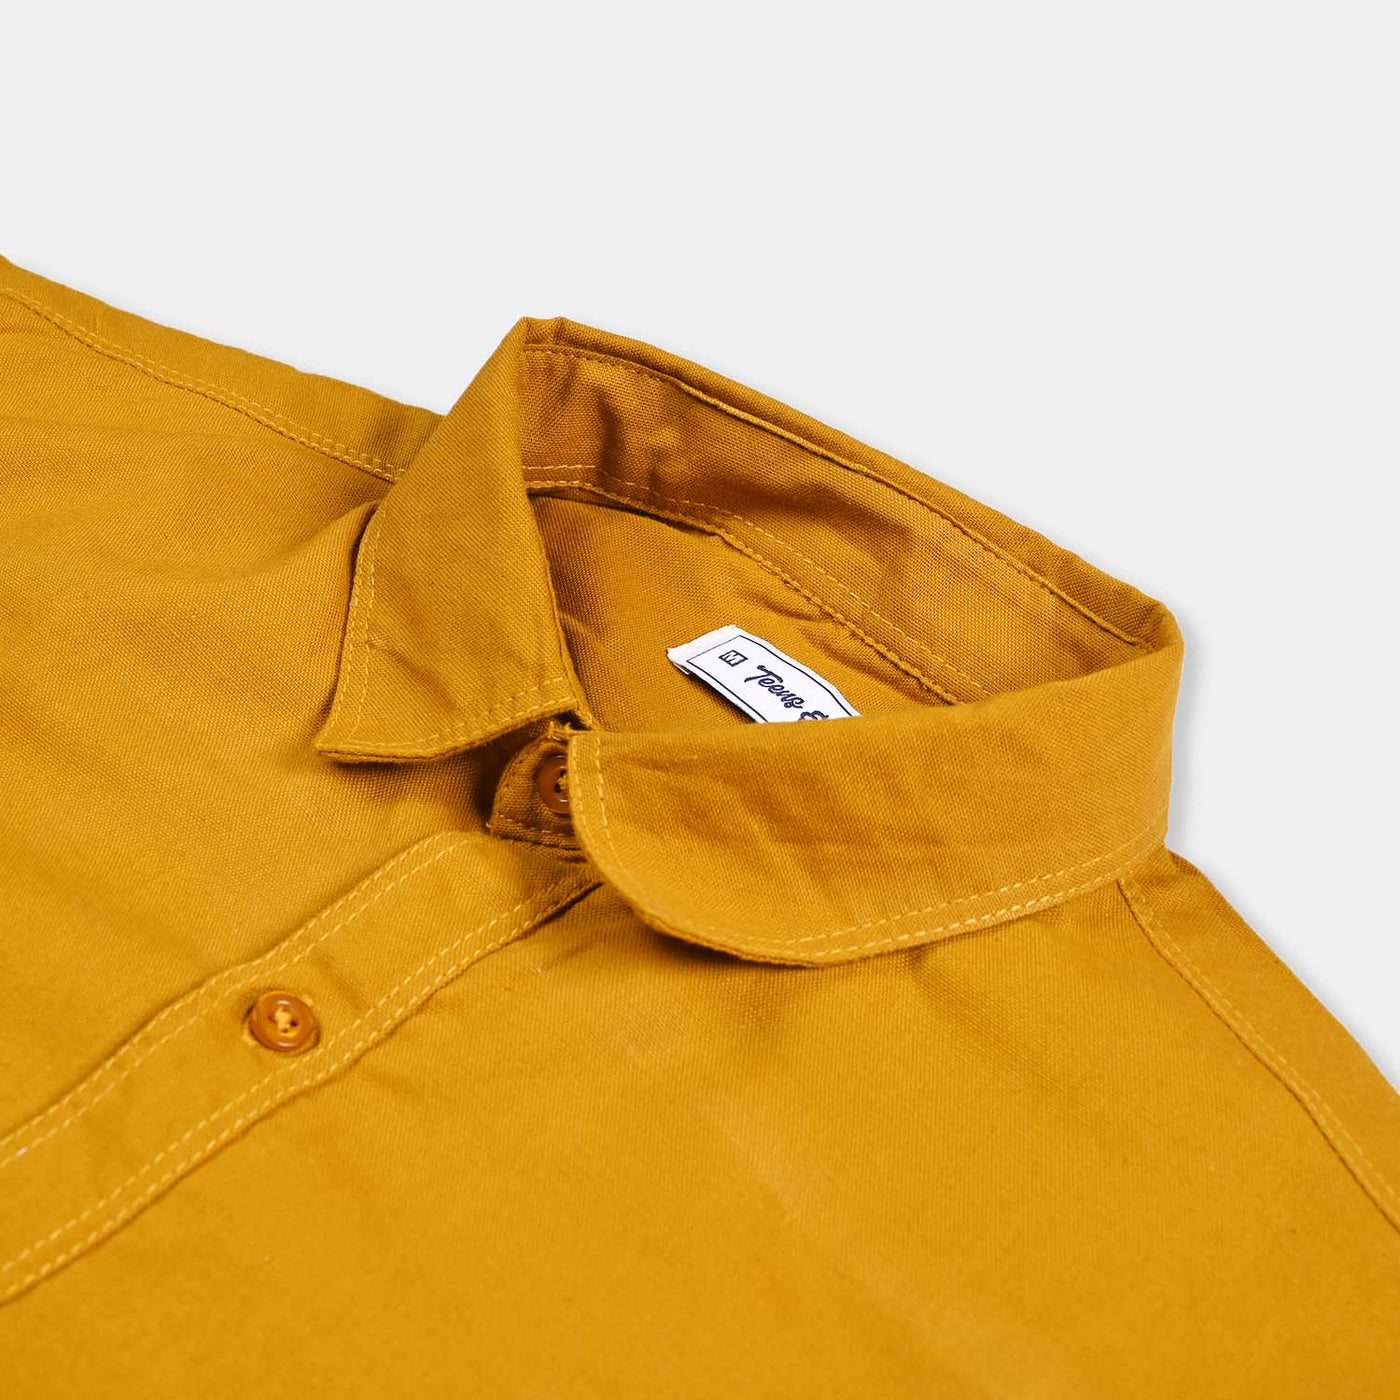 Teens Boys Cotton Casual Shirt F/S Basic-Mustard